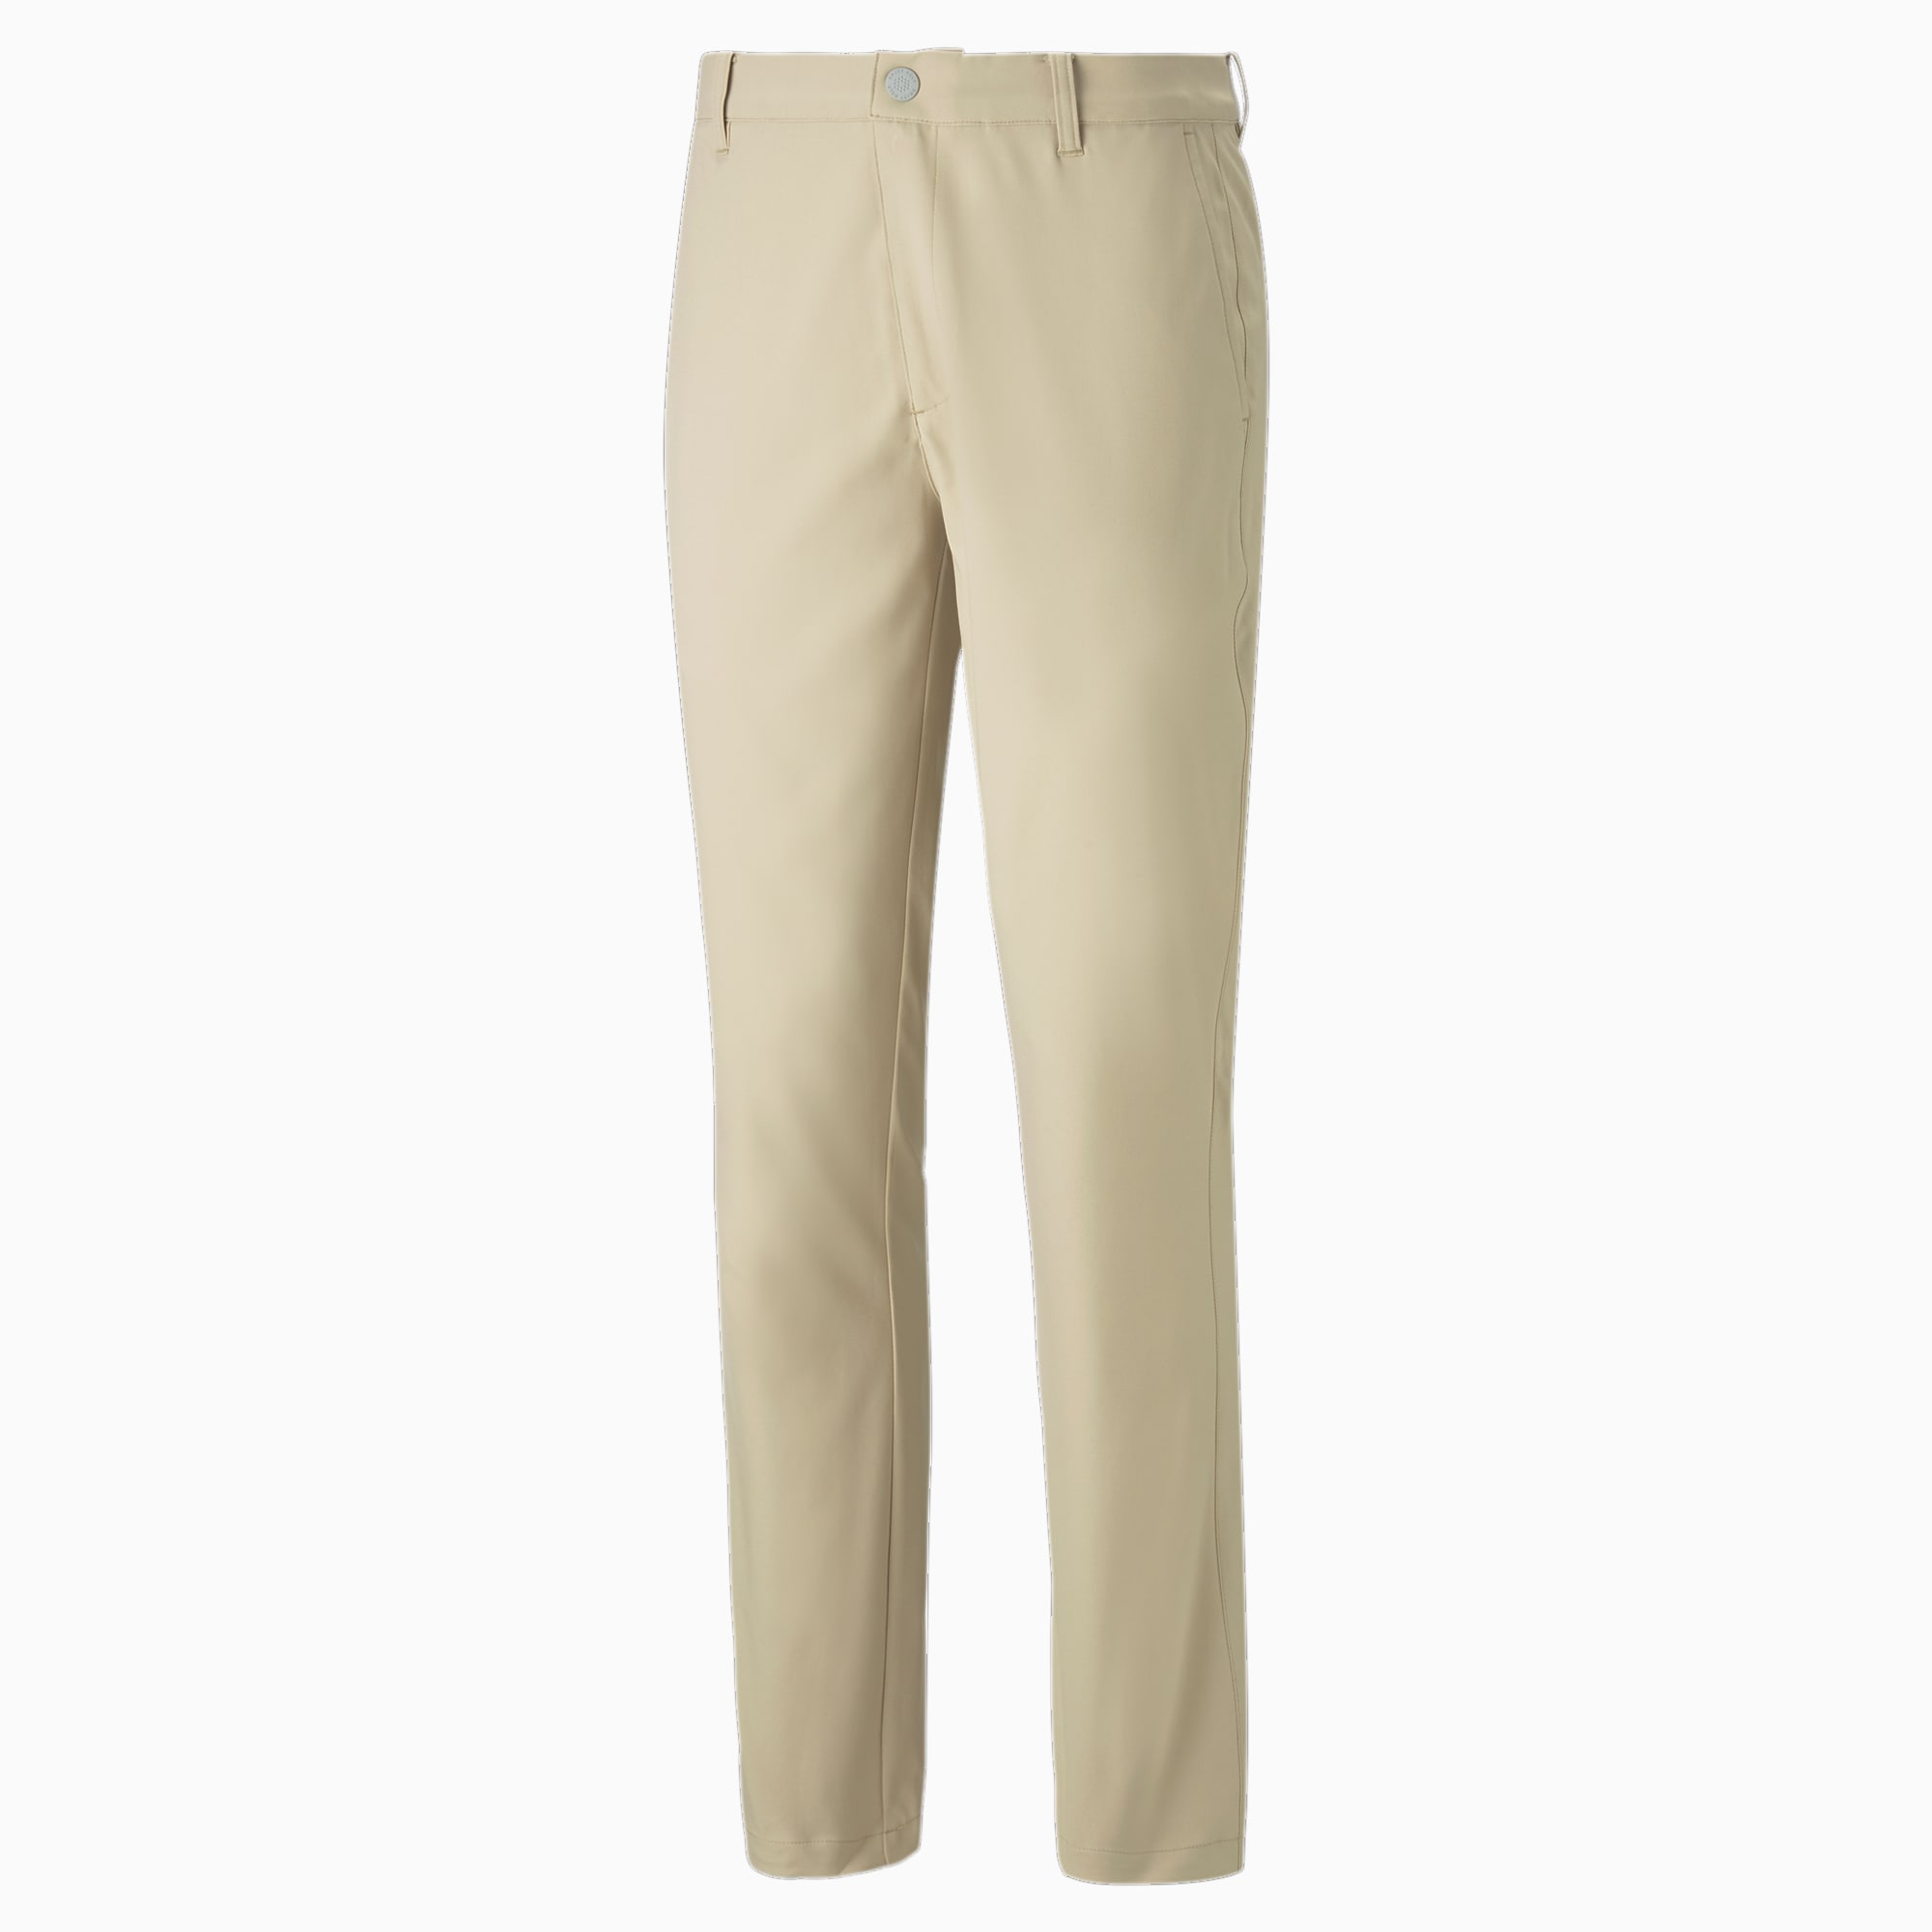 PUMA Dealer Tailored Golf Pants Men, Alabaster, Size 34/34, Clothing